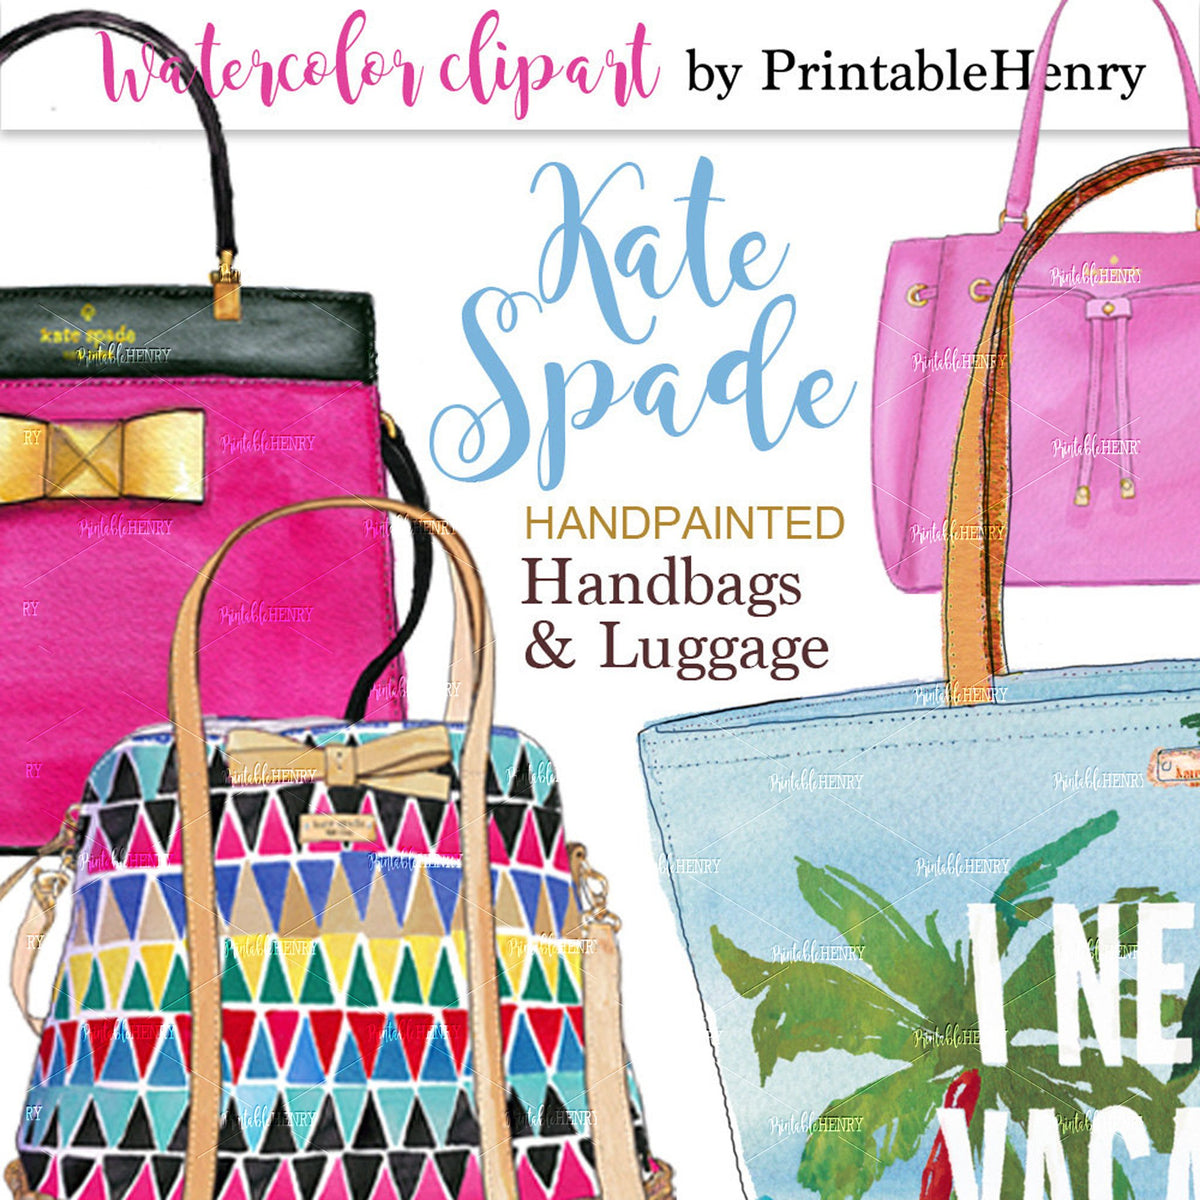 Designer Bags Printable – PrintableHenry